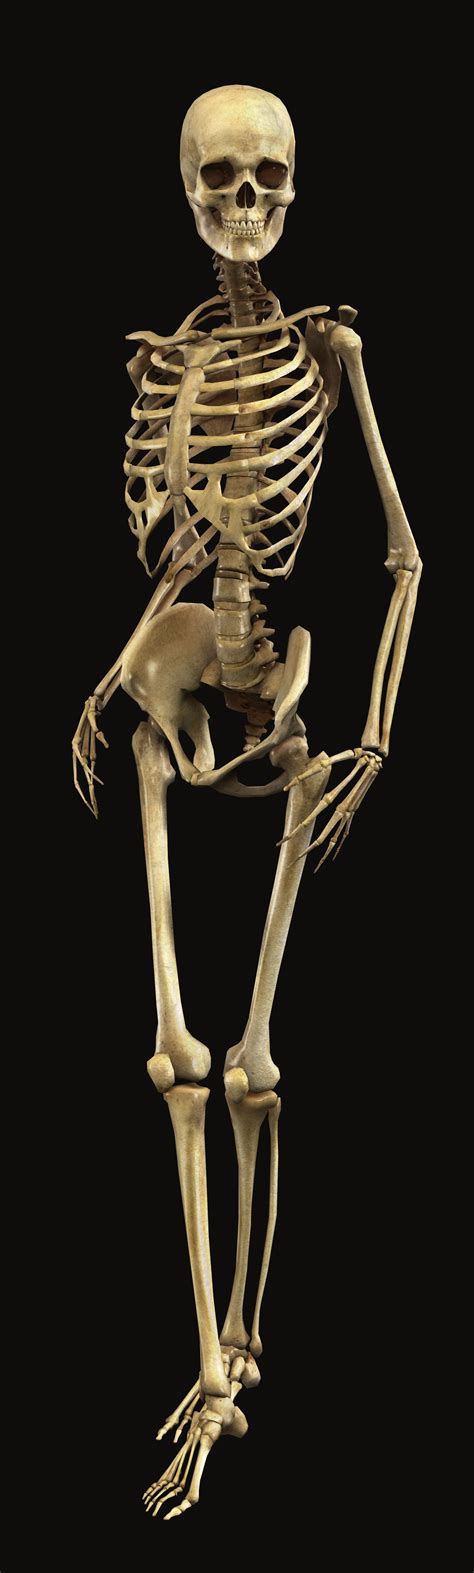 Bryan Brandenburg Official Human Skeleton